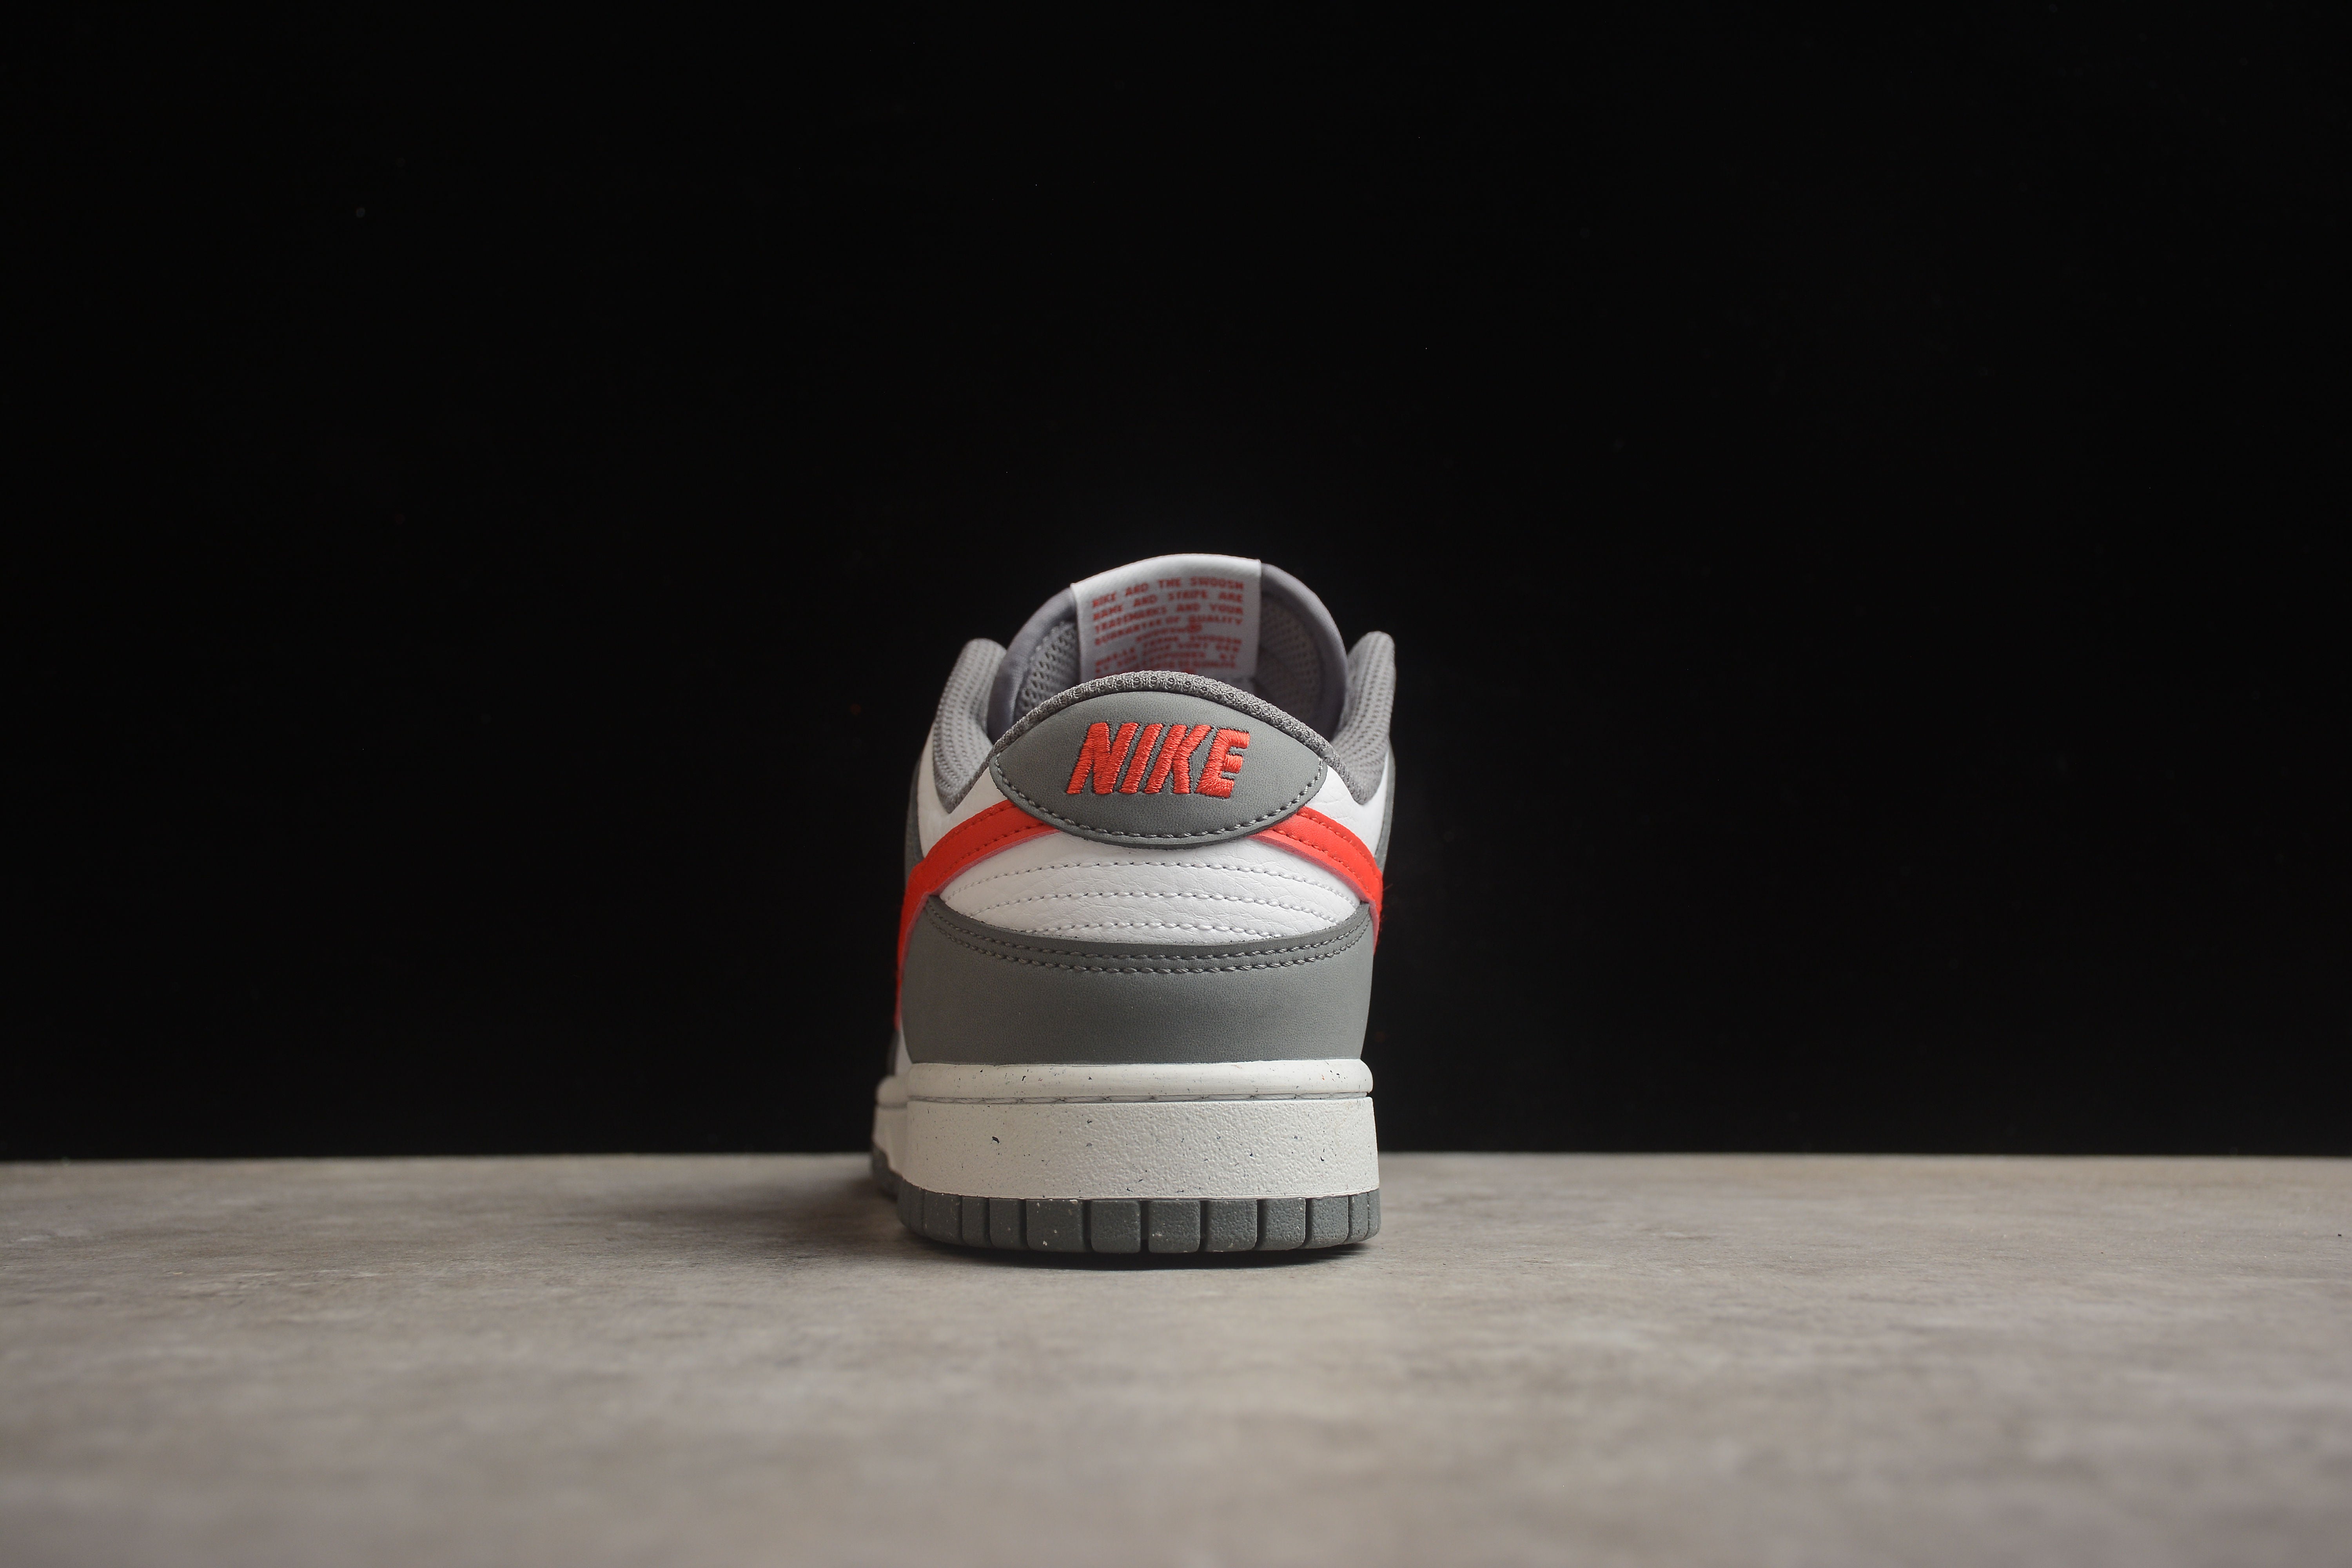 Nike SB low dunk white grey orange shoes